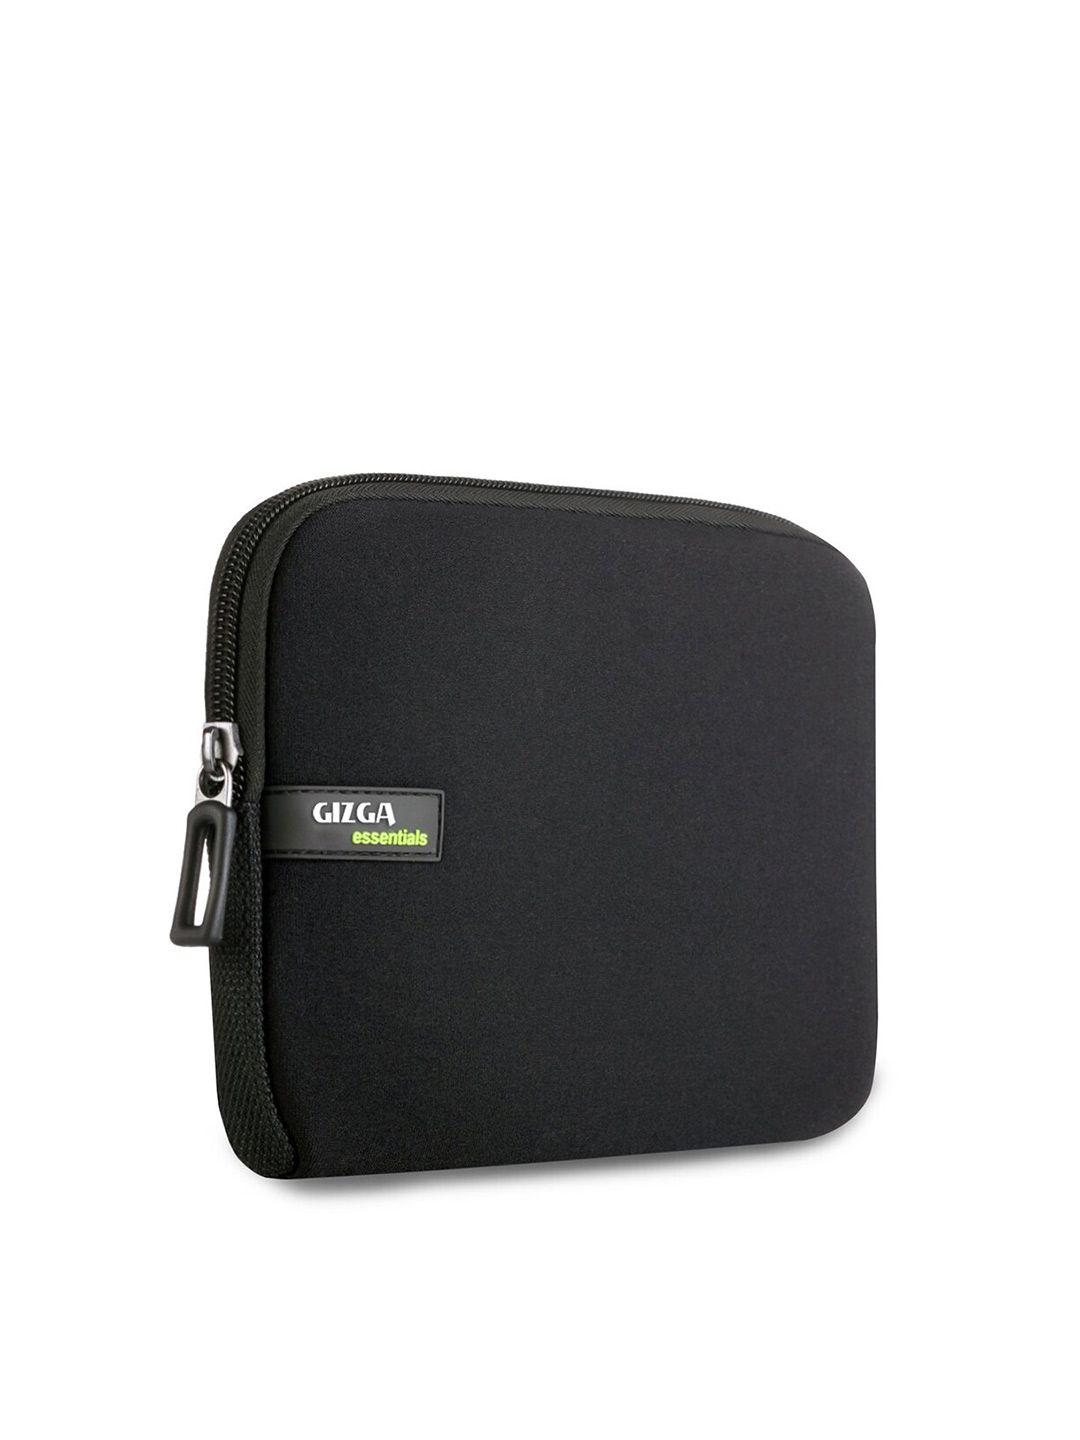 gizga essentials grey water resistant laptop bag